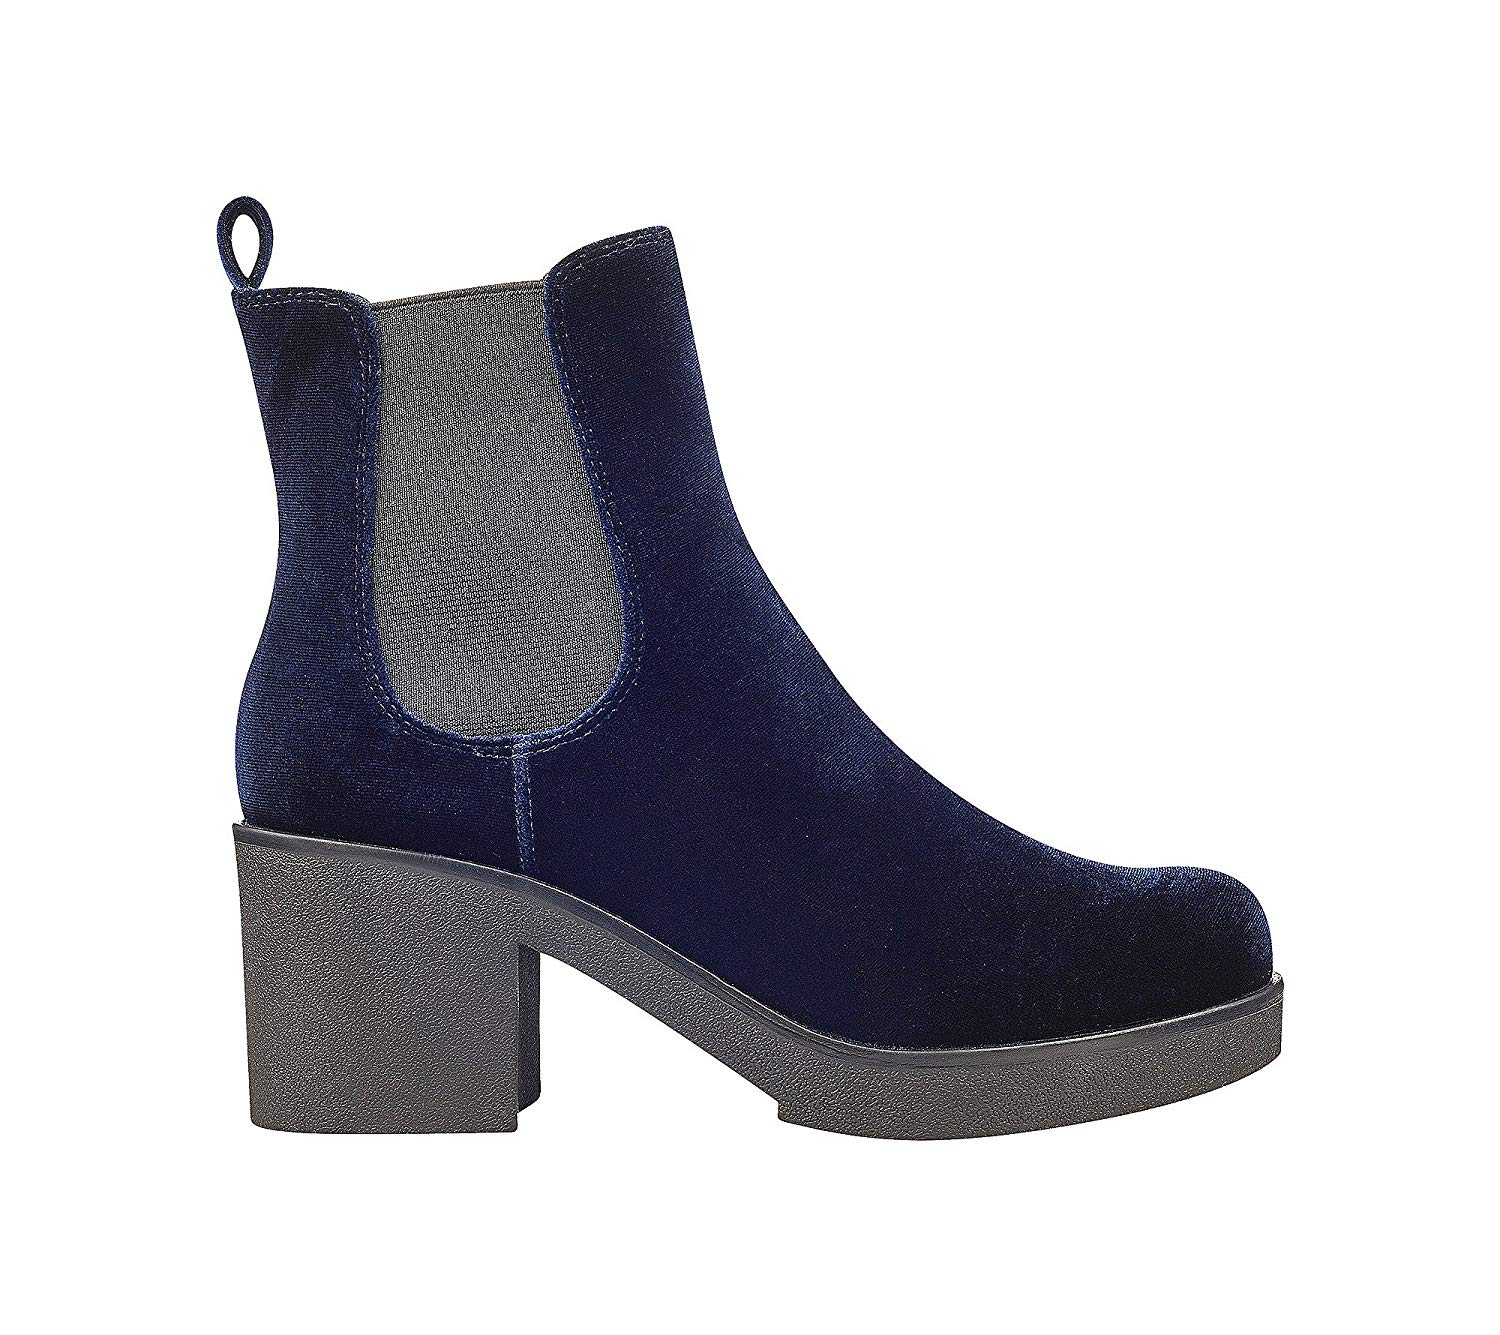 Indigo Rd. Womens Veraly Square Toe Ankle Fashion Boots, Dark Blue ...